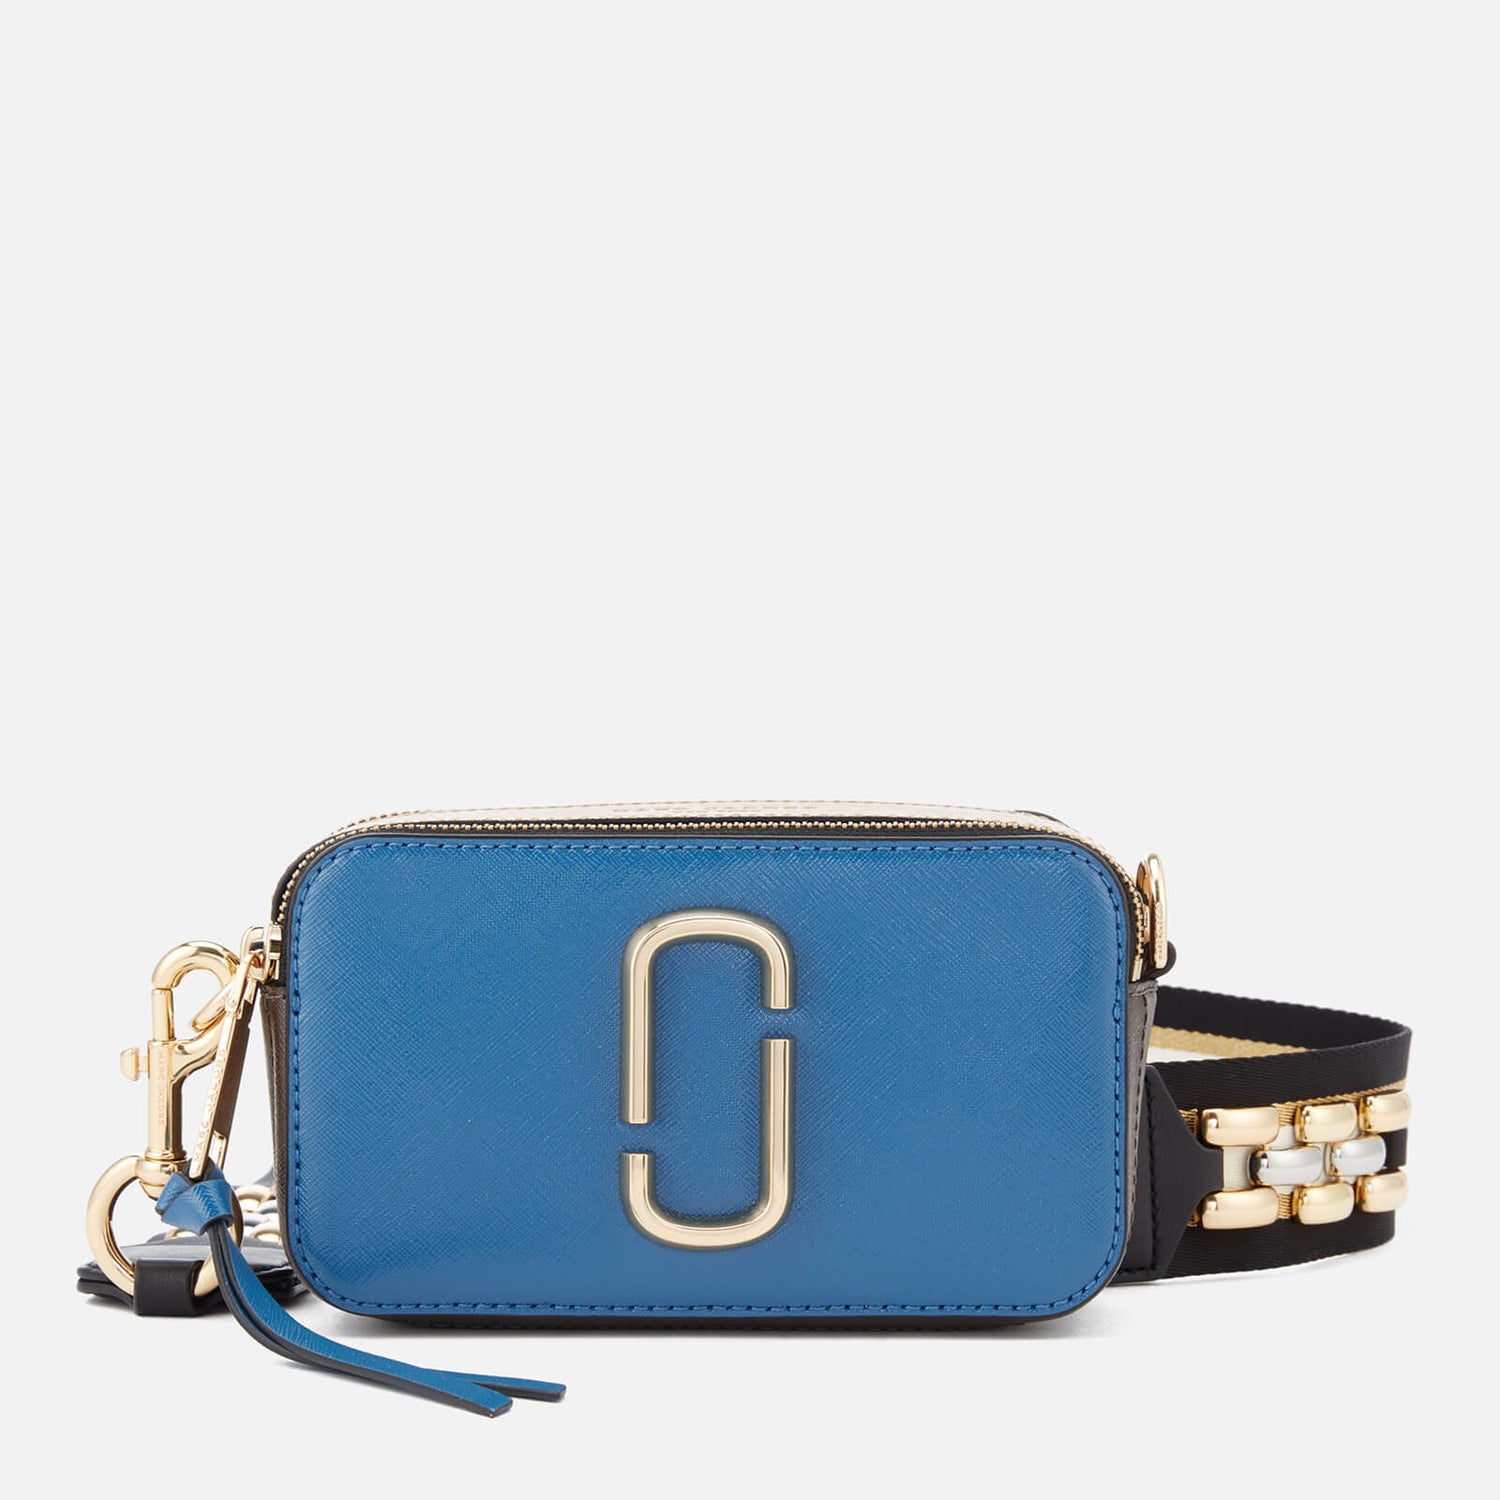 Marc Jacobs Women's Snapshot Cross Body Bag - Vintage Blue/Multi